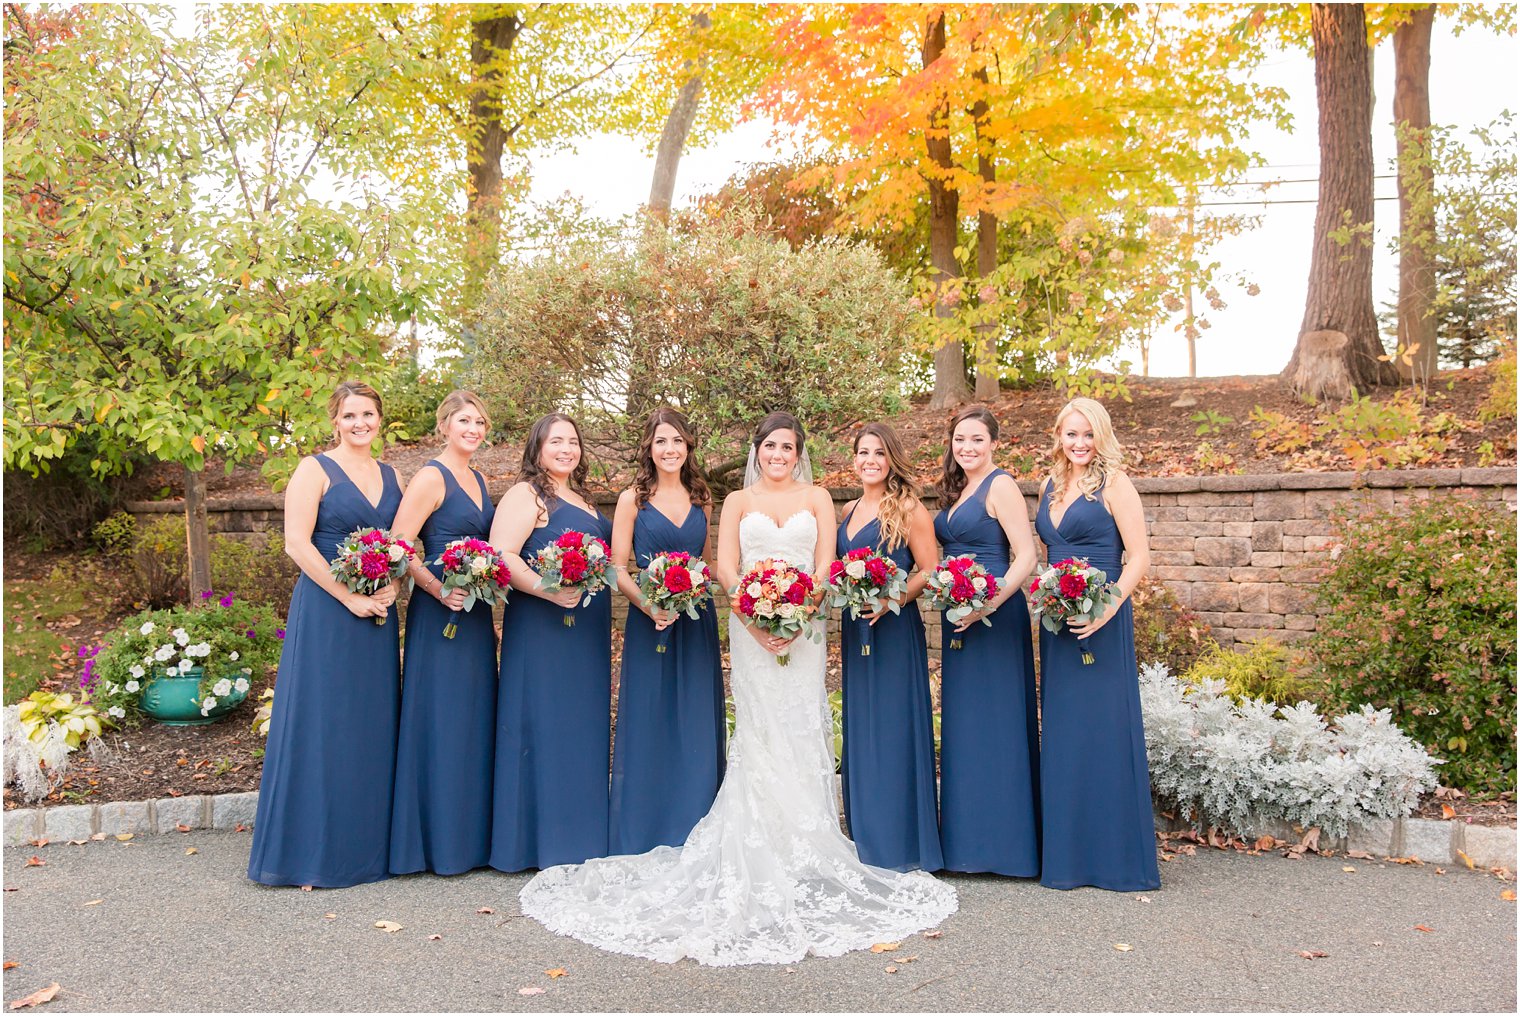 Bridesmaids in navy and burgundy colors | Photos by NJ Wedding Photographers Idalia Photography